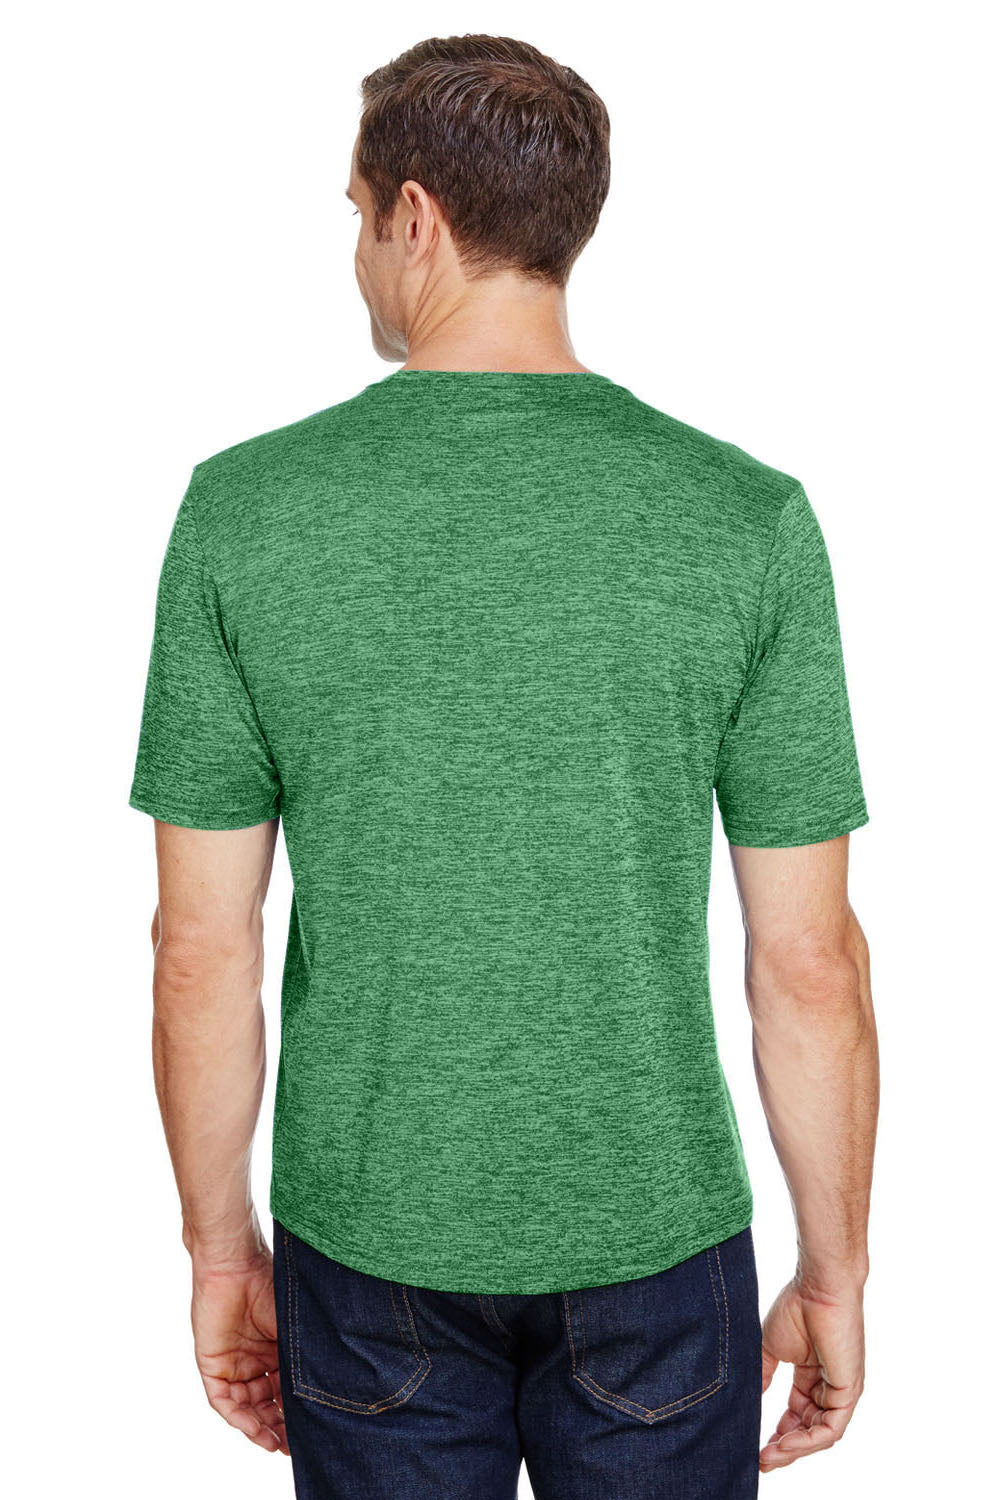 A4 N3010 Mens Tonal Space Dye Crewneck Short Sleeve T-Shirt Kelly Green Back